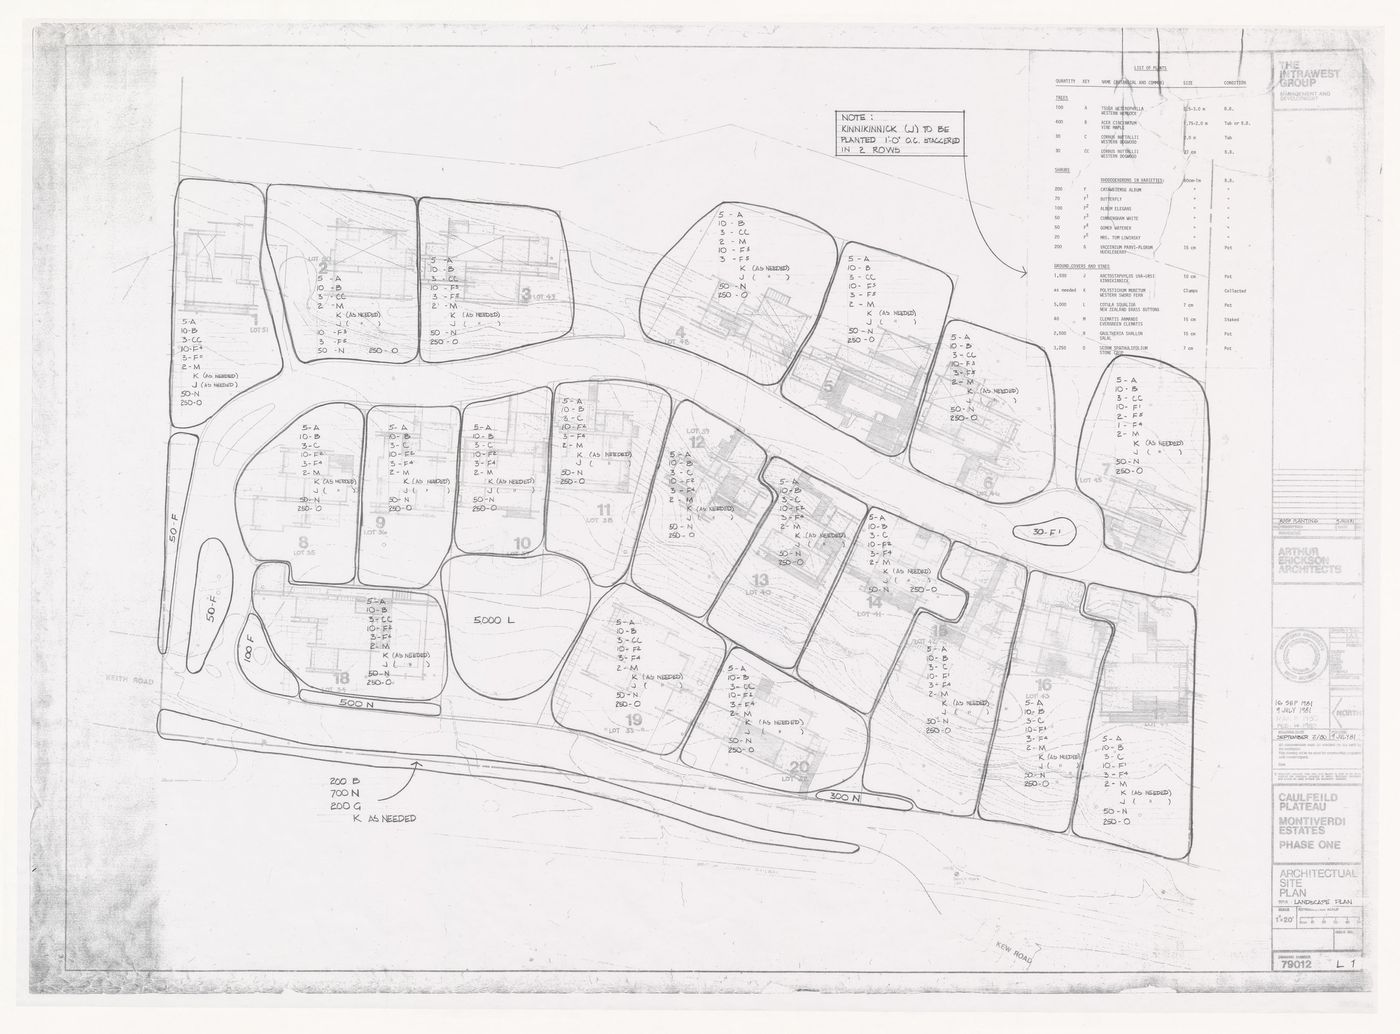 Site plan for Montiverdi Estates, West Vancouver, British Columbia